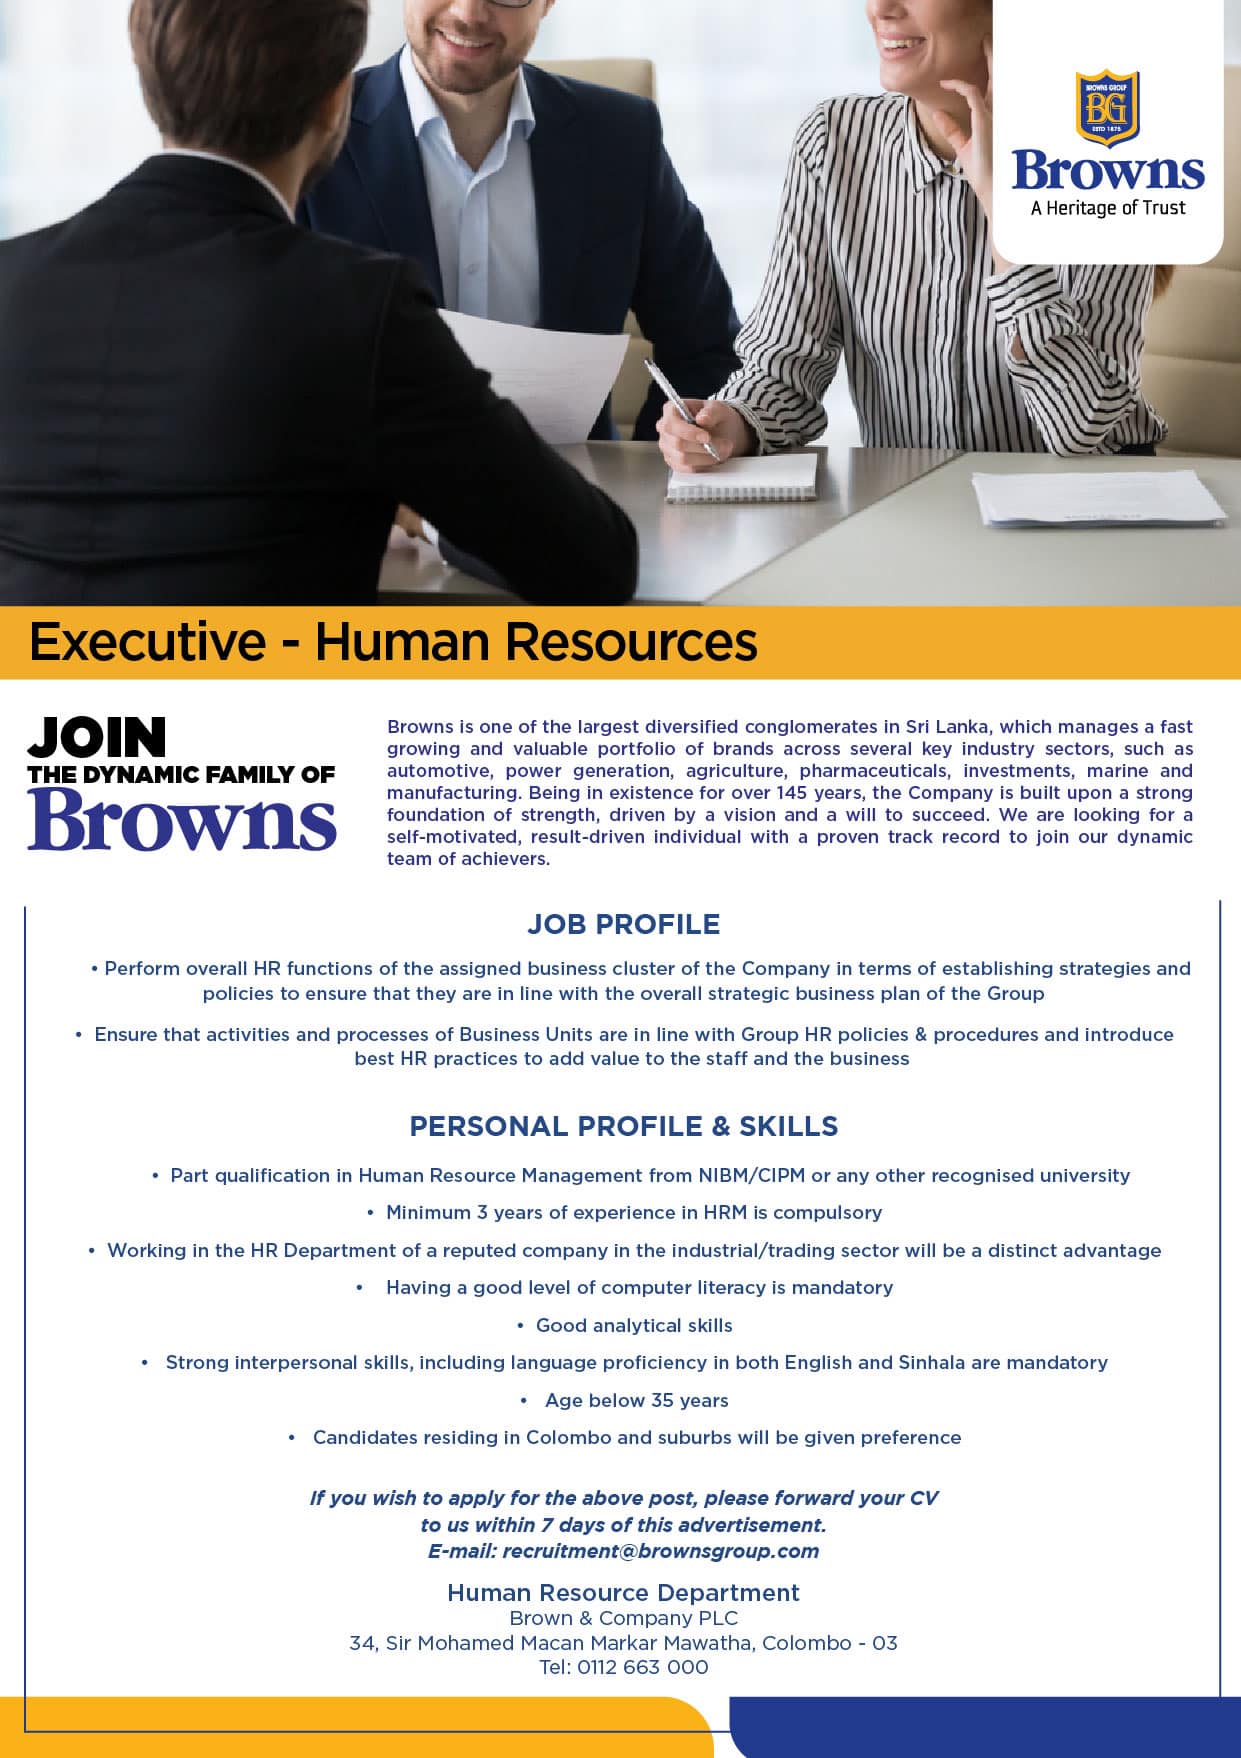 Executive (Human Resources) Jobs Vacancies – Brown and Company Job Vacancy Details